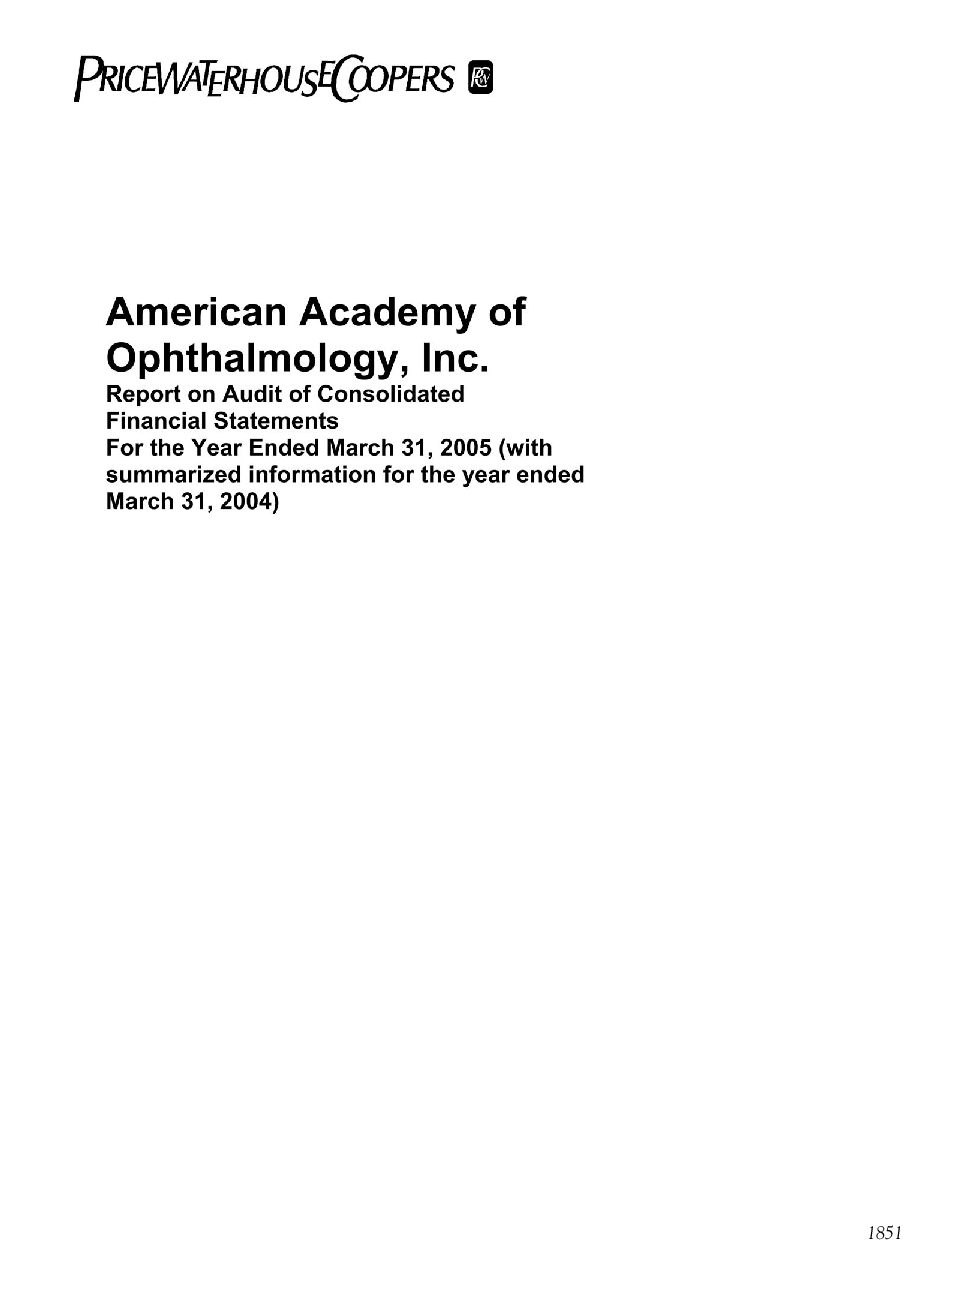 American Academy of Ophthalmology, Inc.